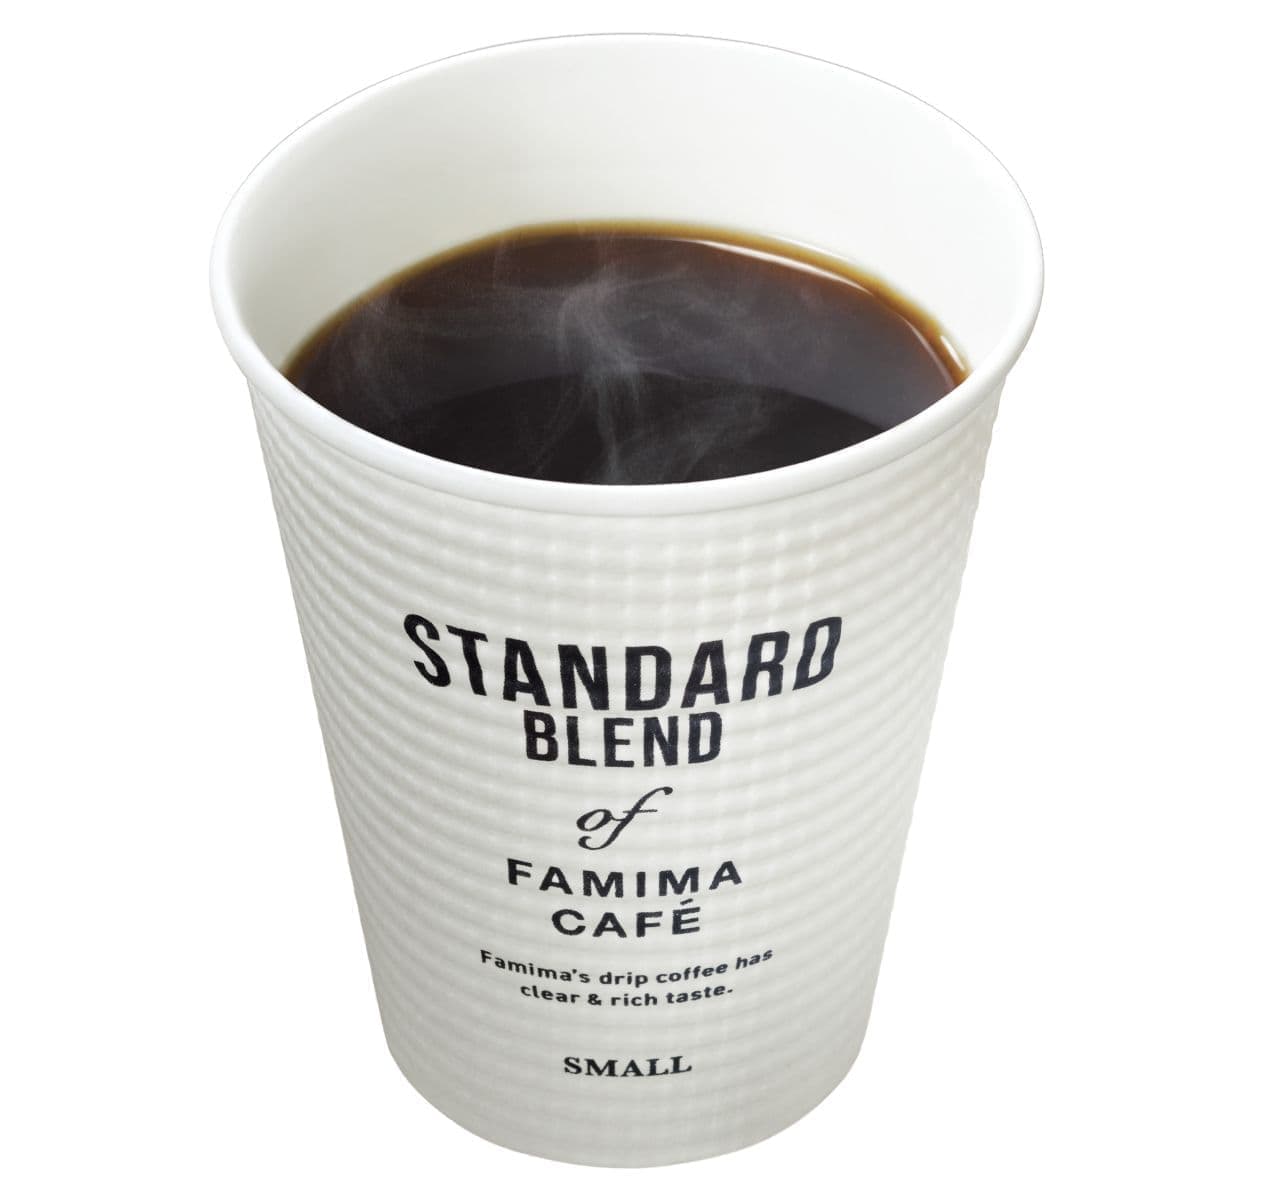 FamilyMart "Blend Coffee"